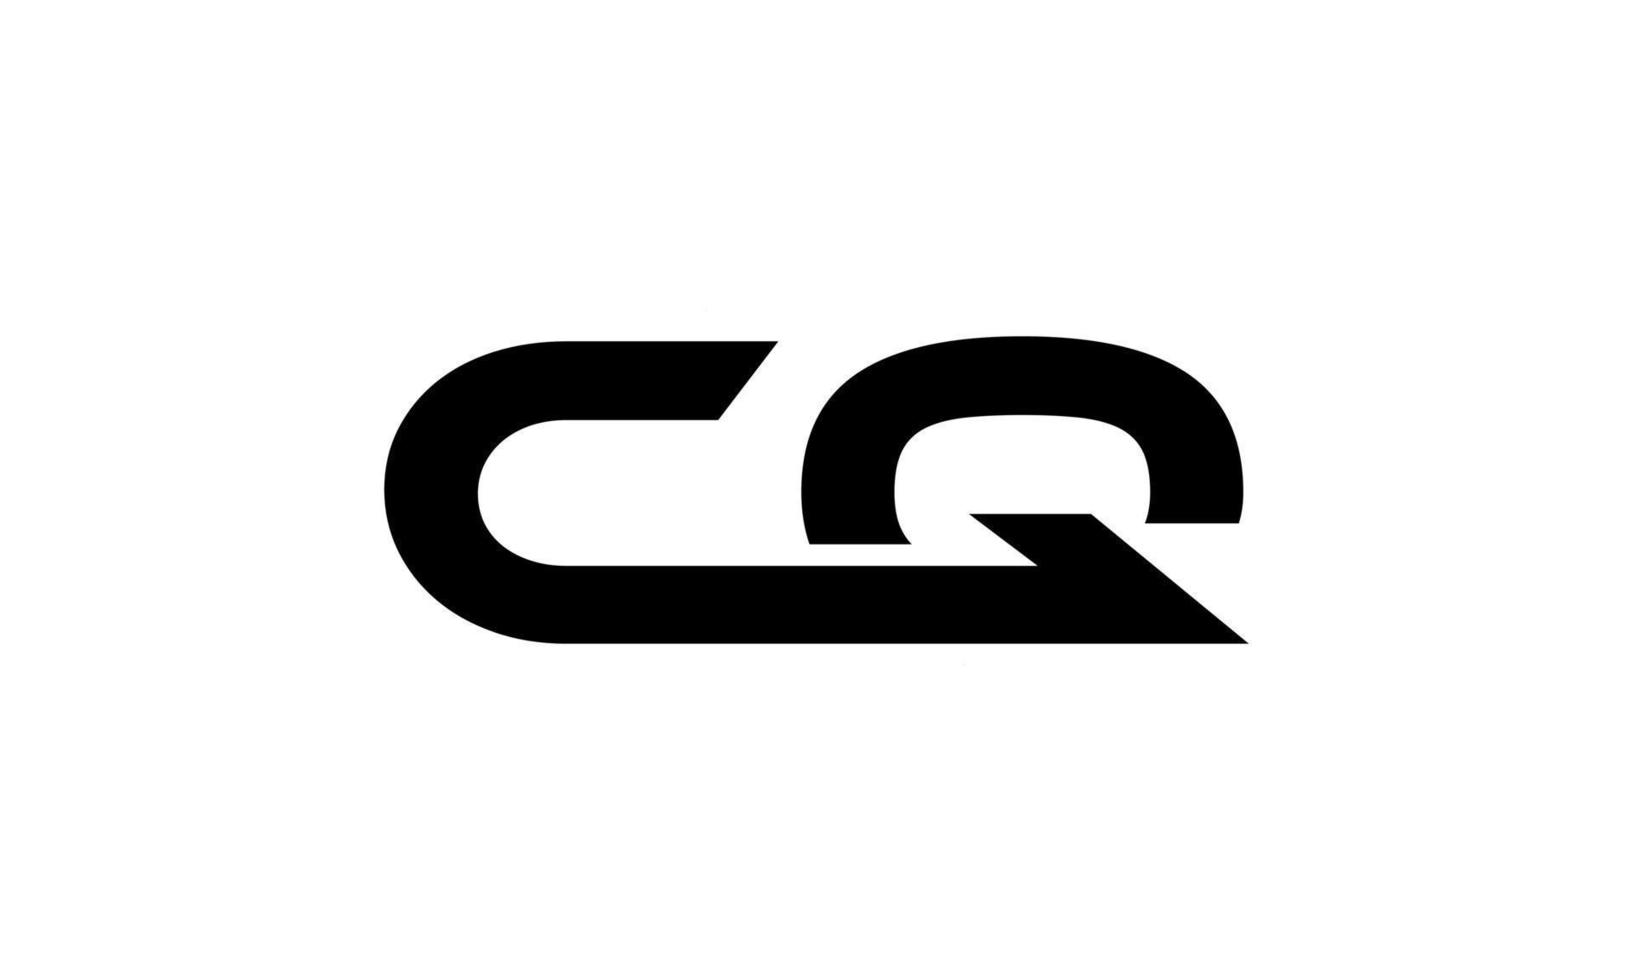 design de logotipo cq. letra cq inicial design de logotipo monograma vector design pro vector.